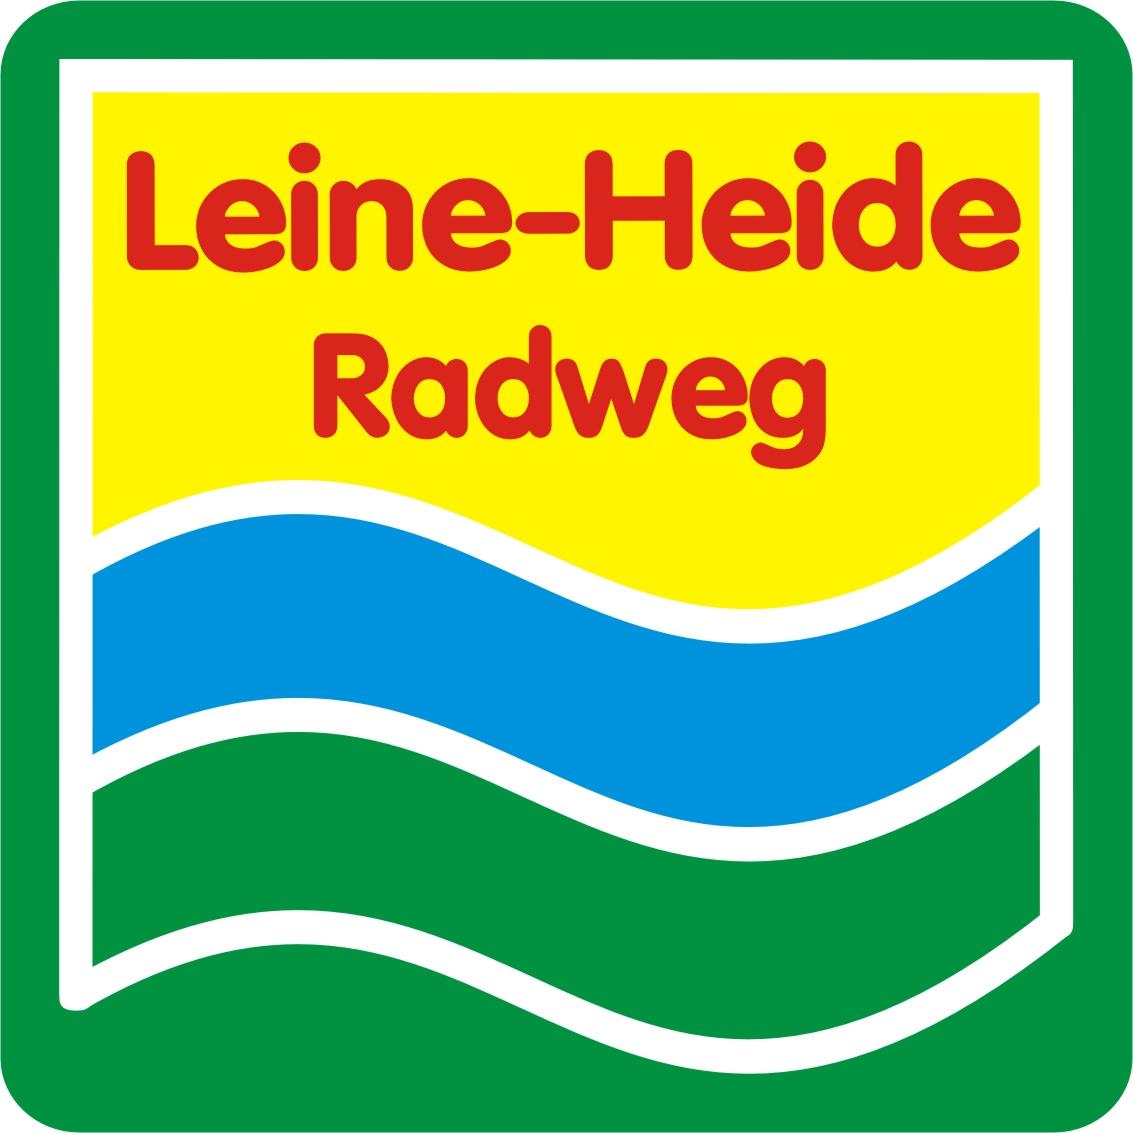 Beschilderung Leine-Heide-Radweg